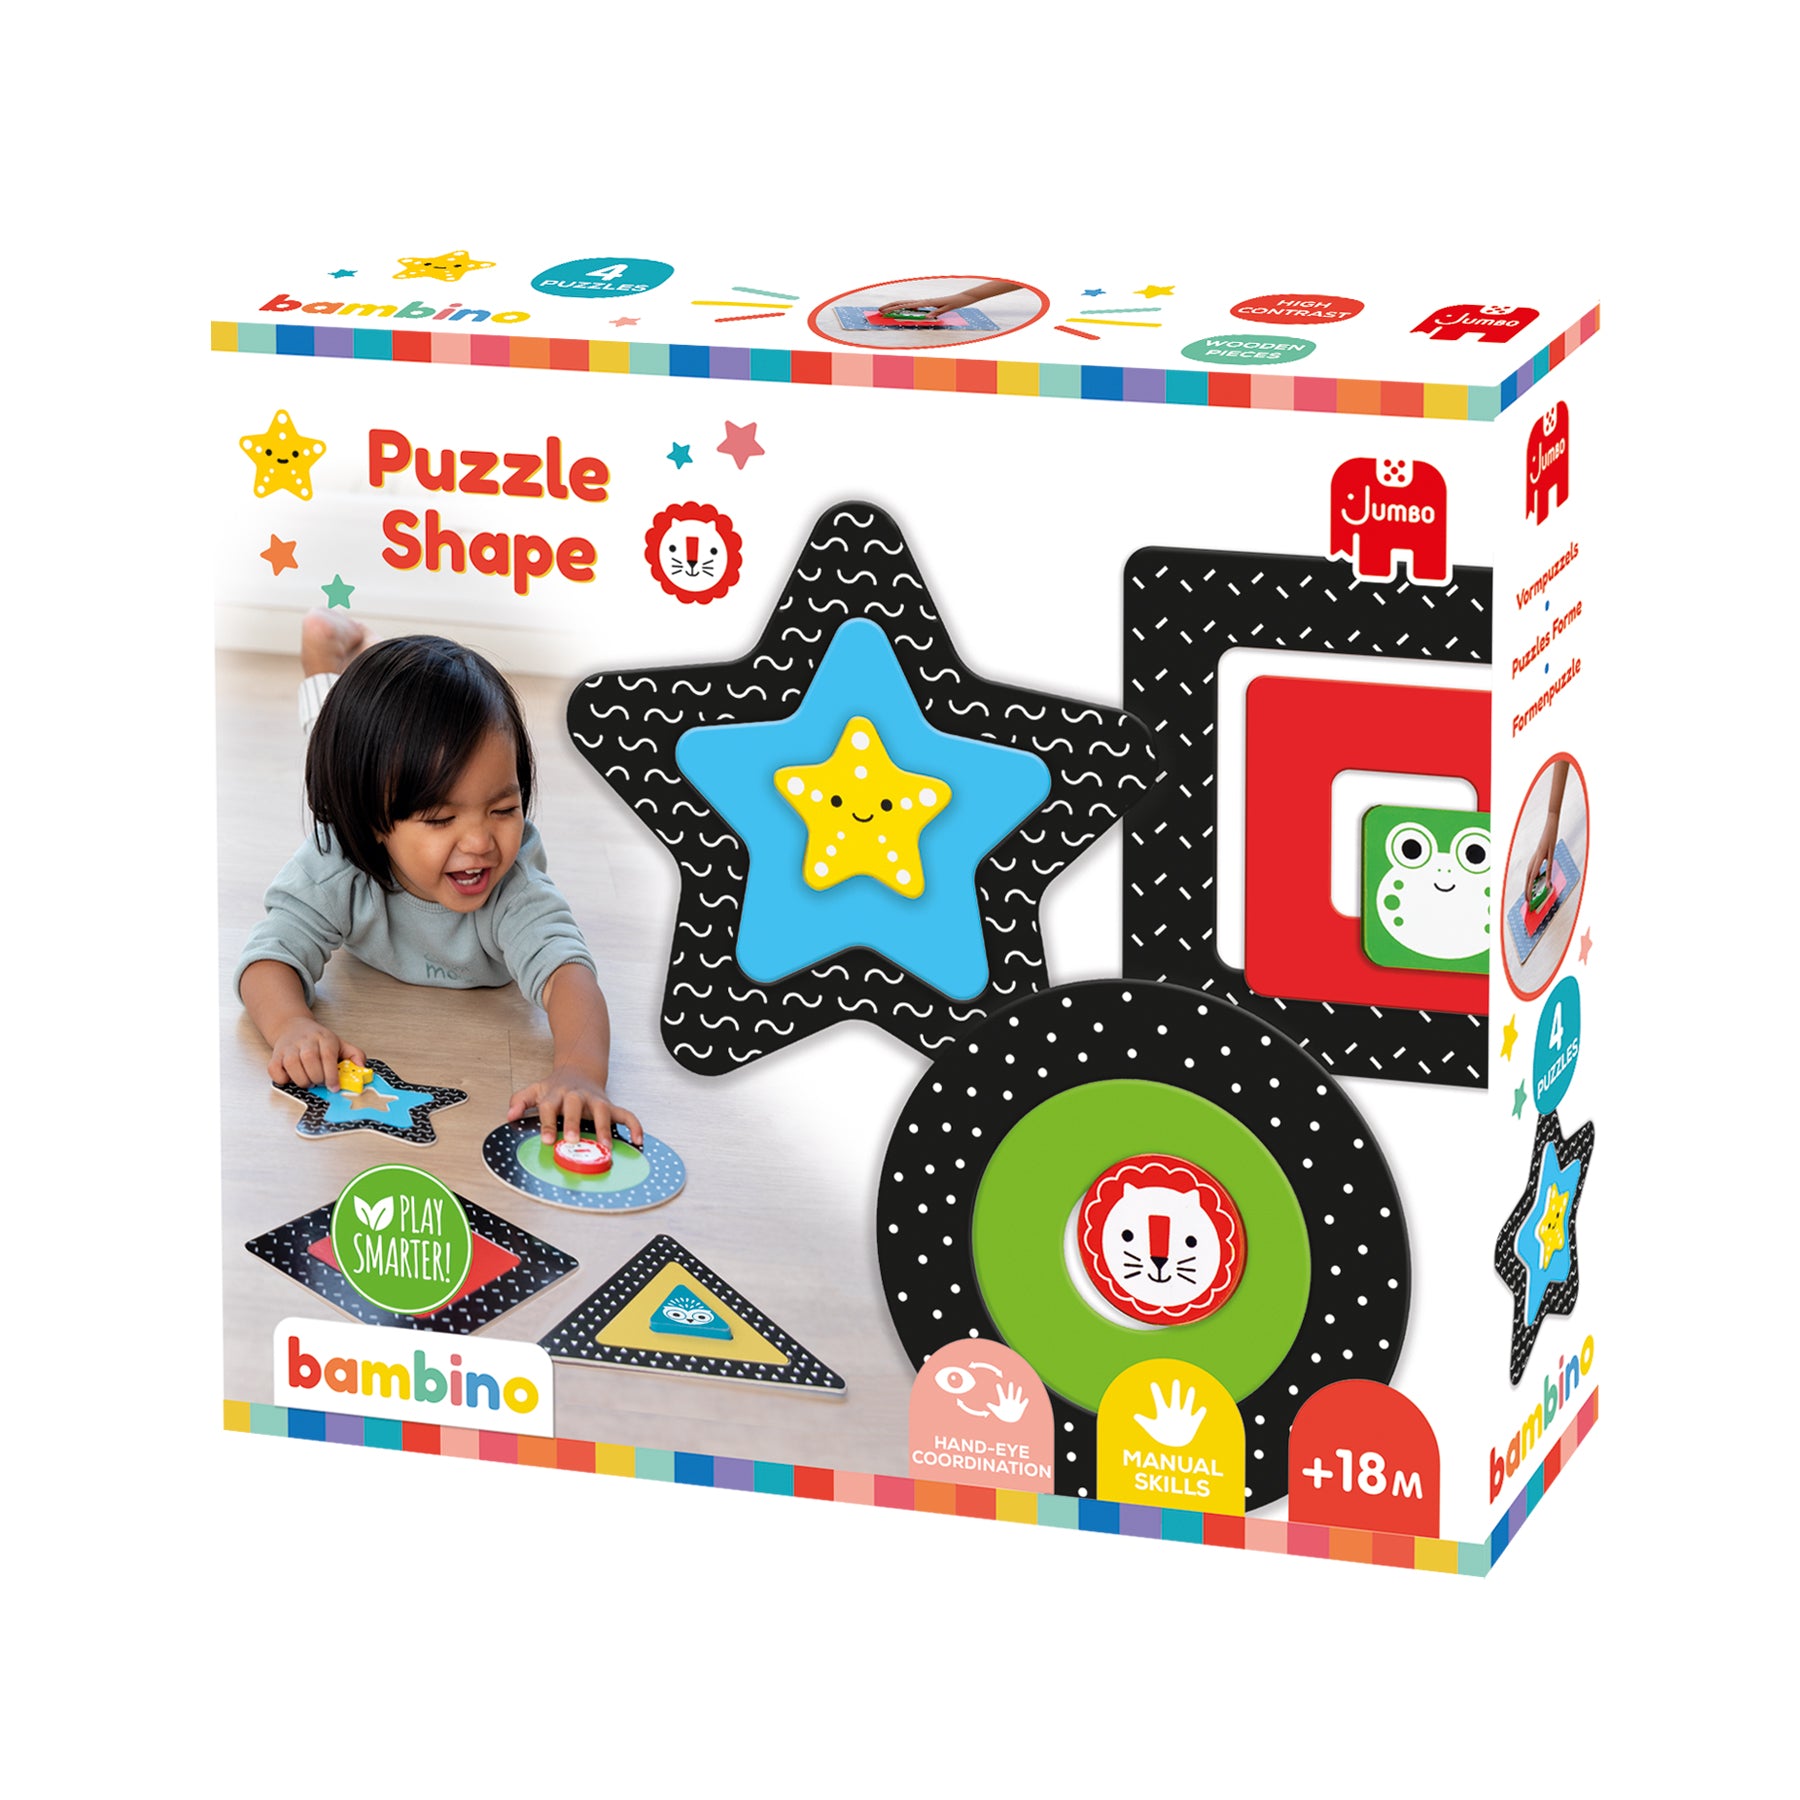 Puzzle shapes - product image - Jumboplay.com